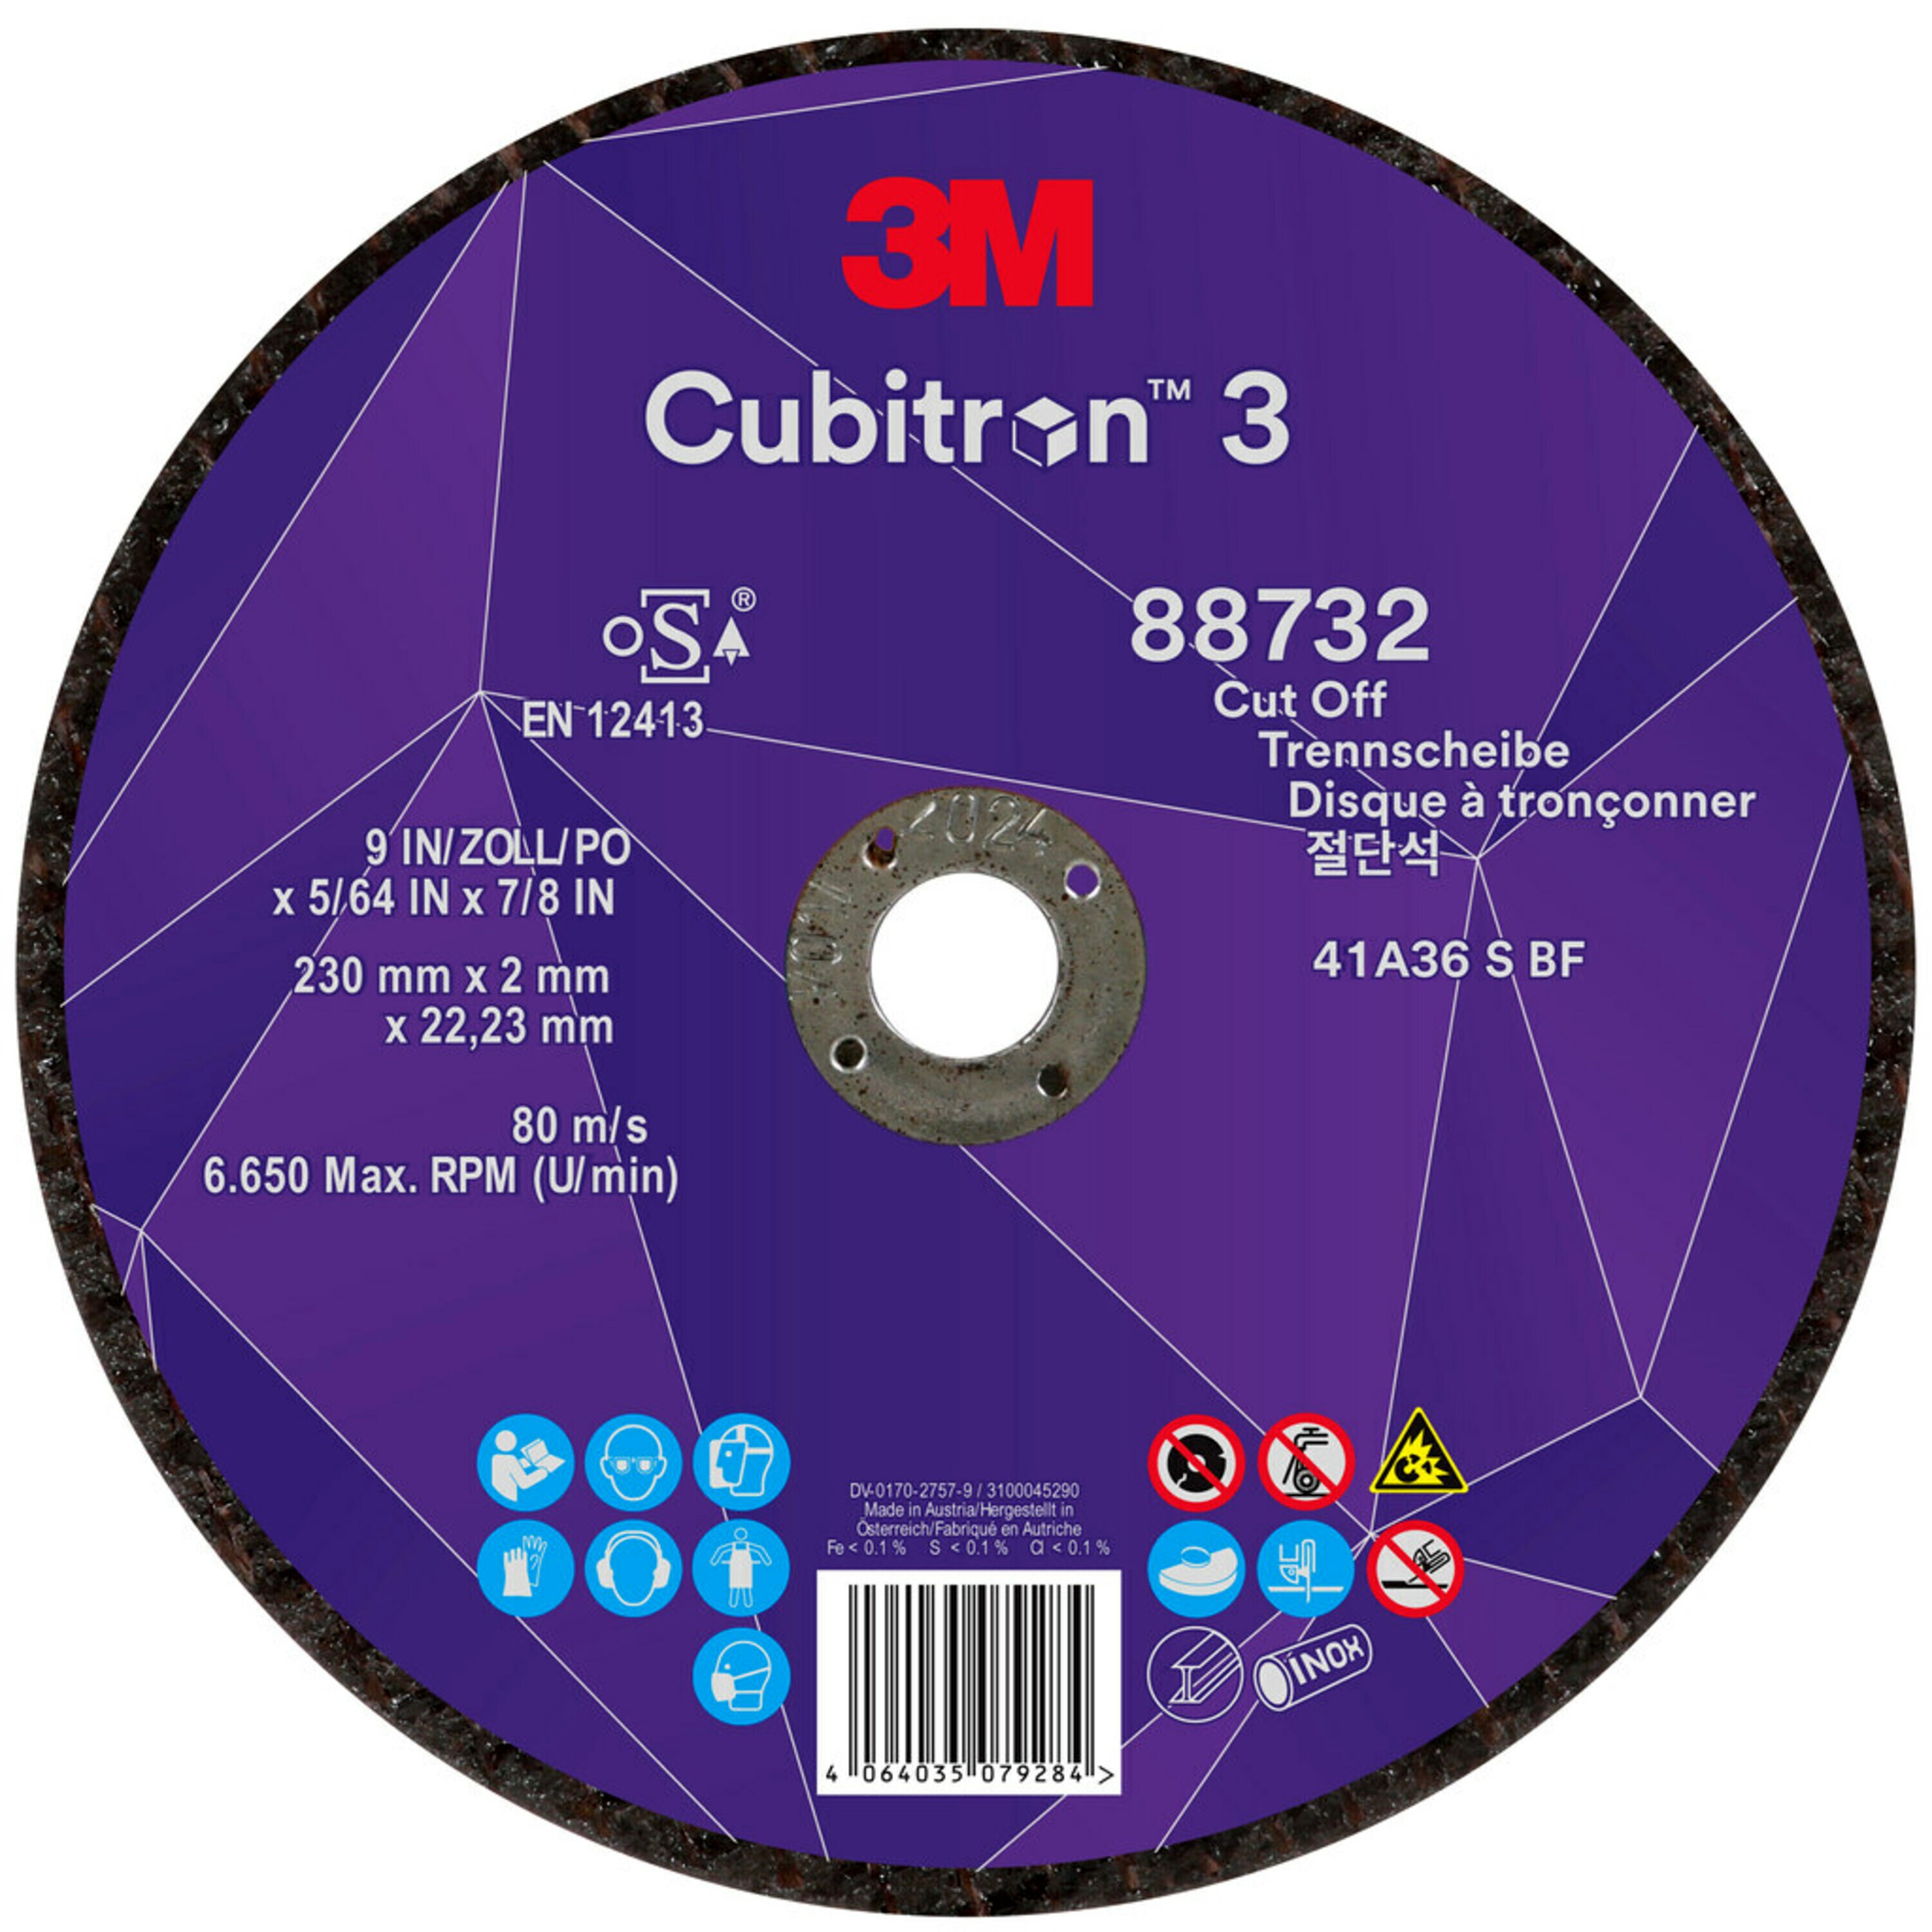 3M Cubitron 3 cut-off wheel, 230 mm, 2 mm, 22.23 mm, 36+, type 41 #88732